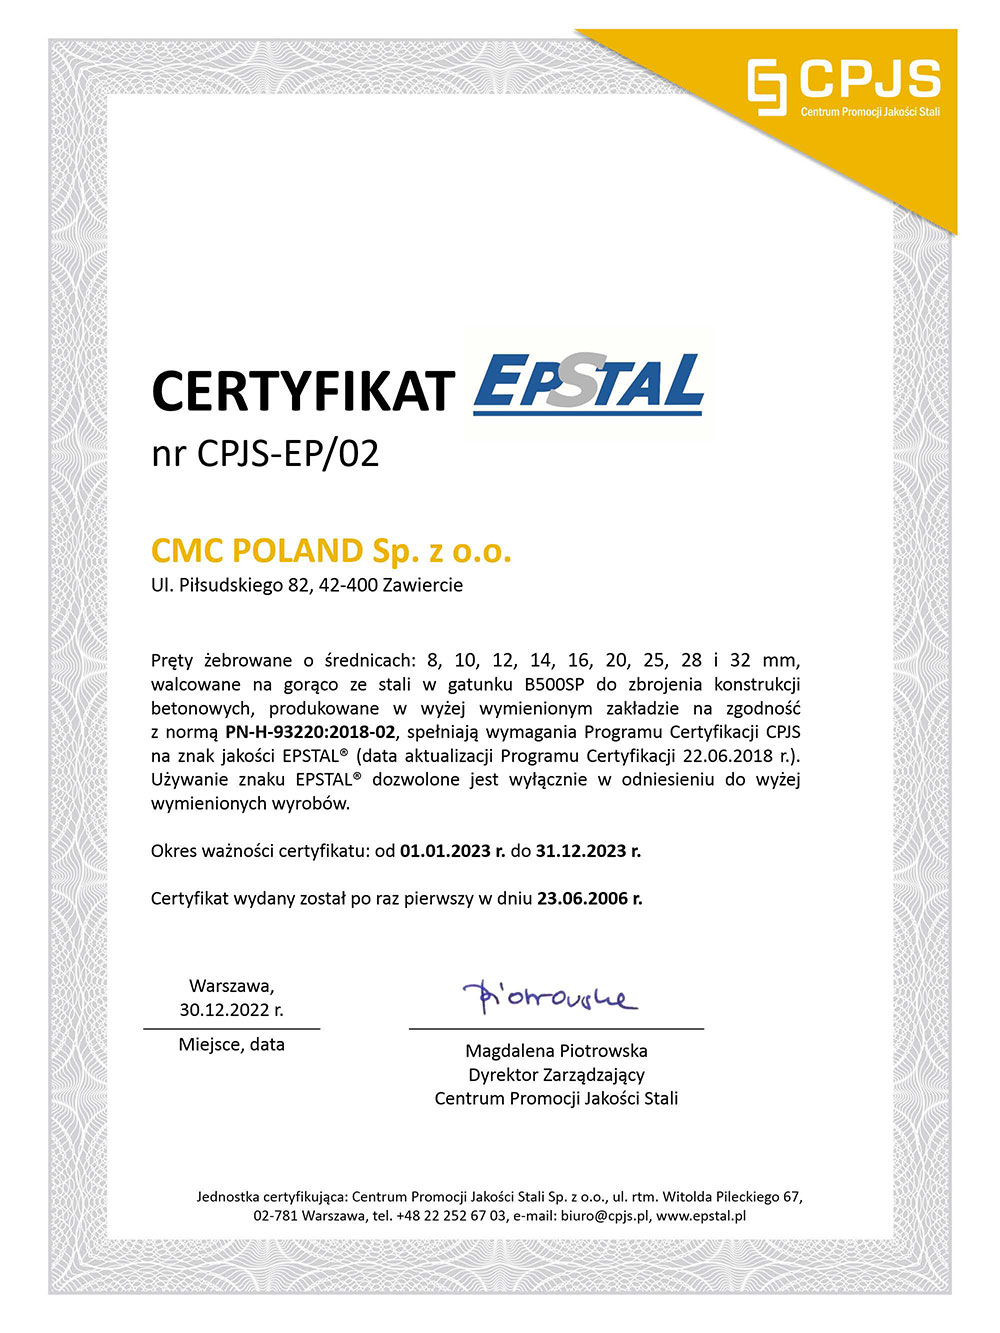 Certyfikat-Epstal-CPJS-EP_02_2022.jpg